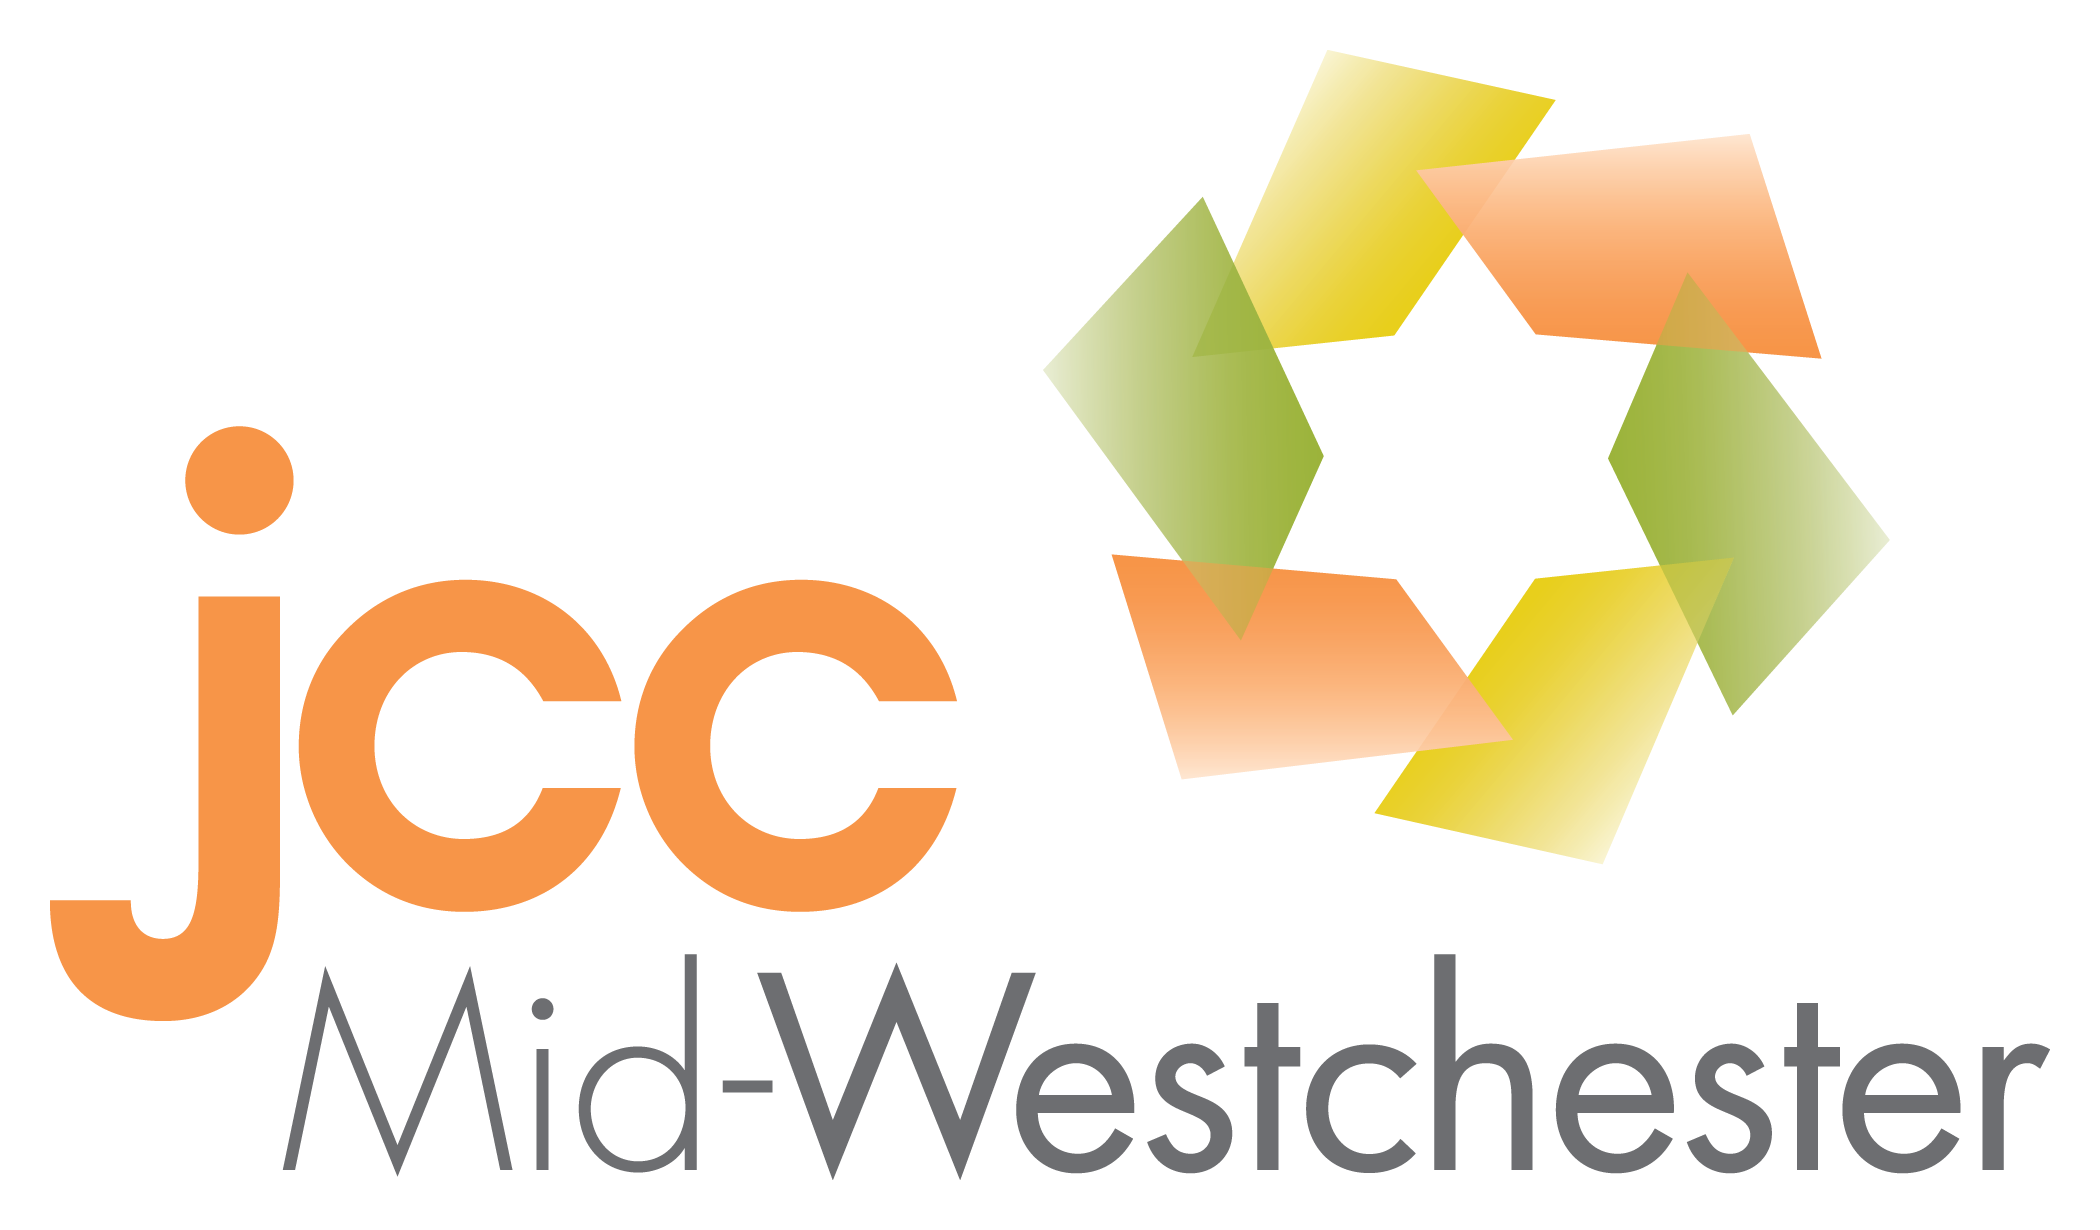 JCC Mid-Westchester